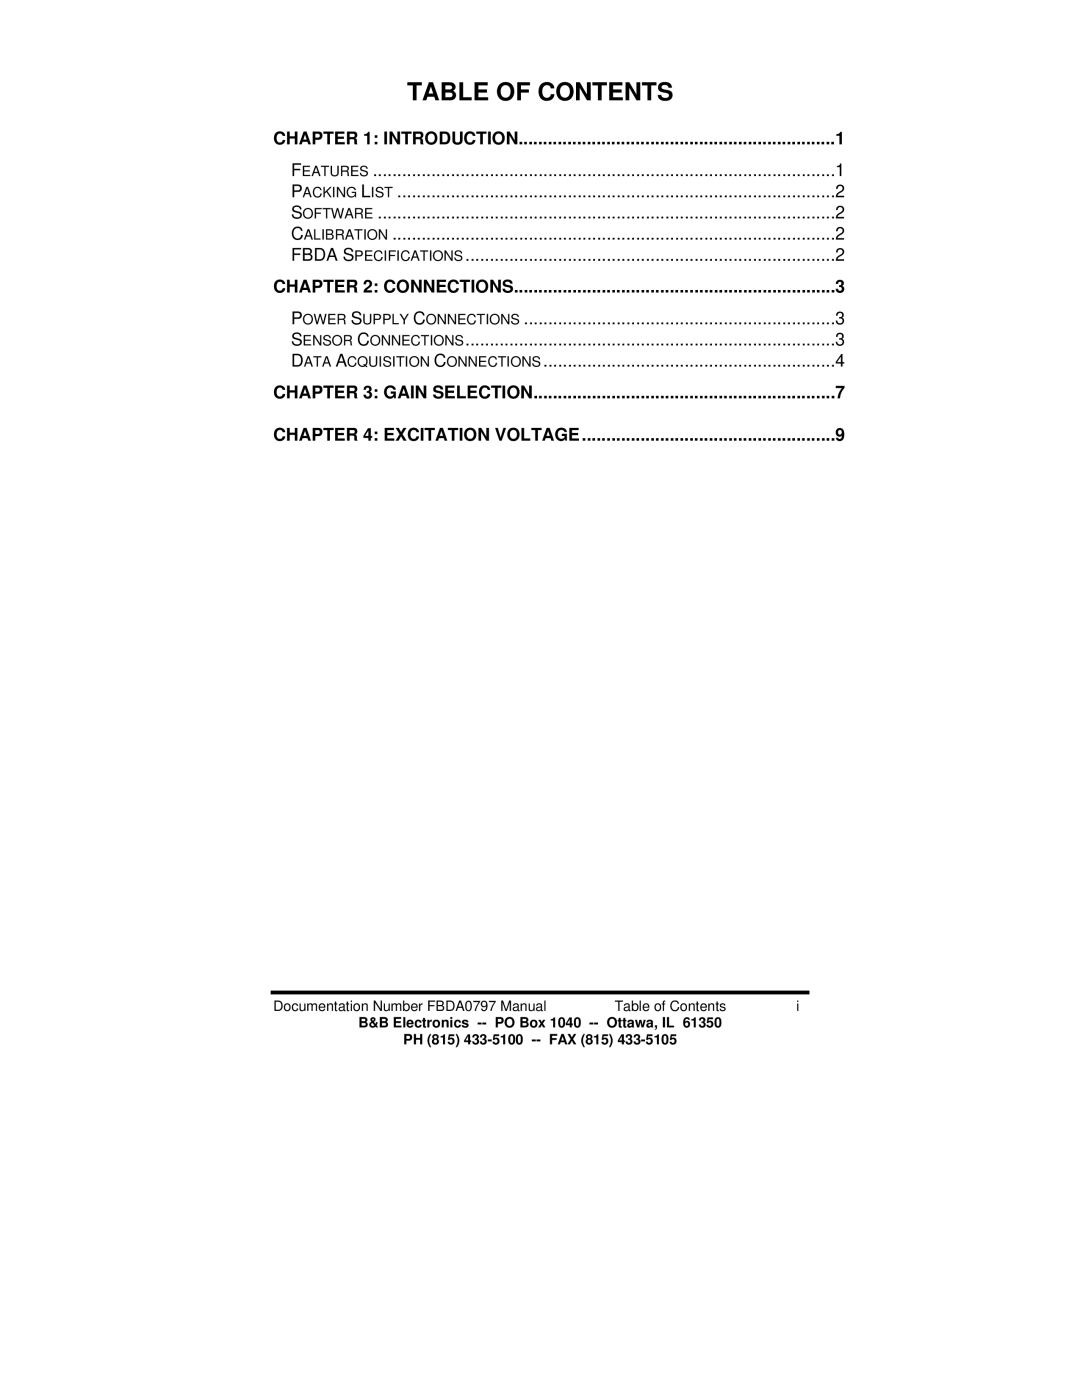 B&B Electronics FBDA manual Table of Contents 